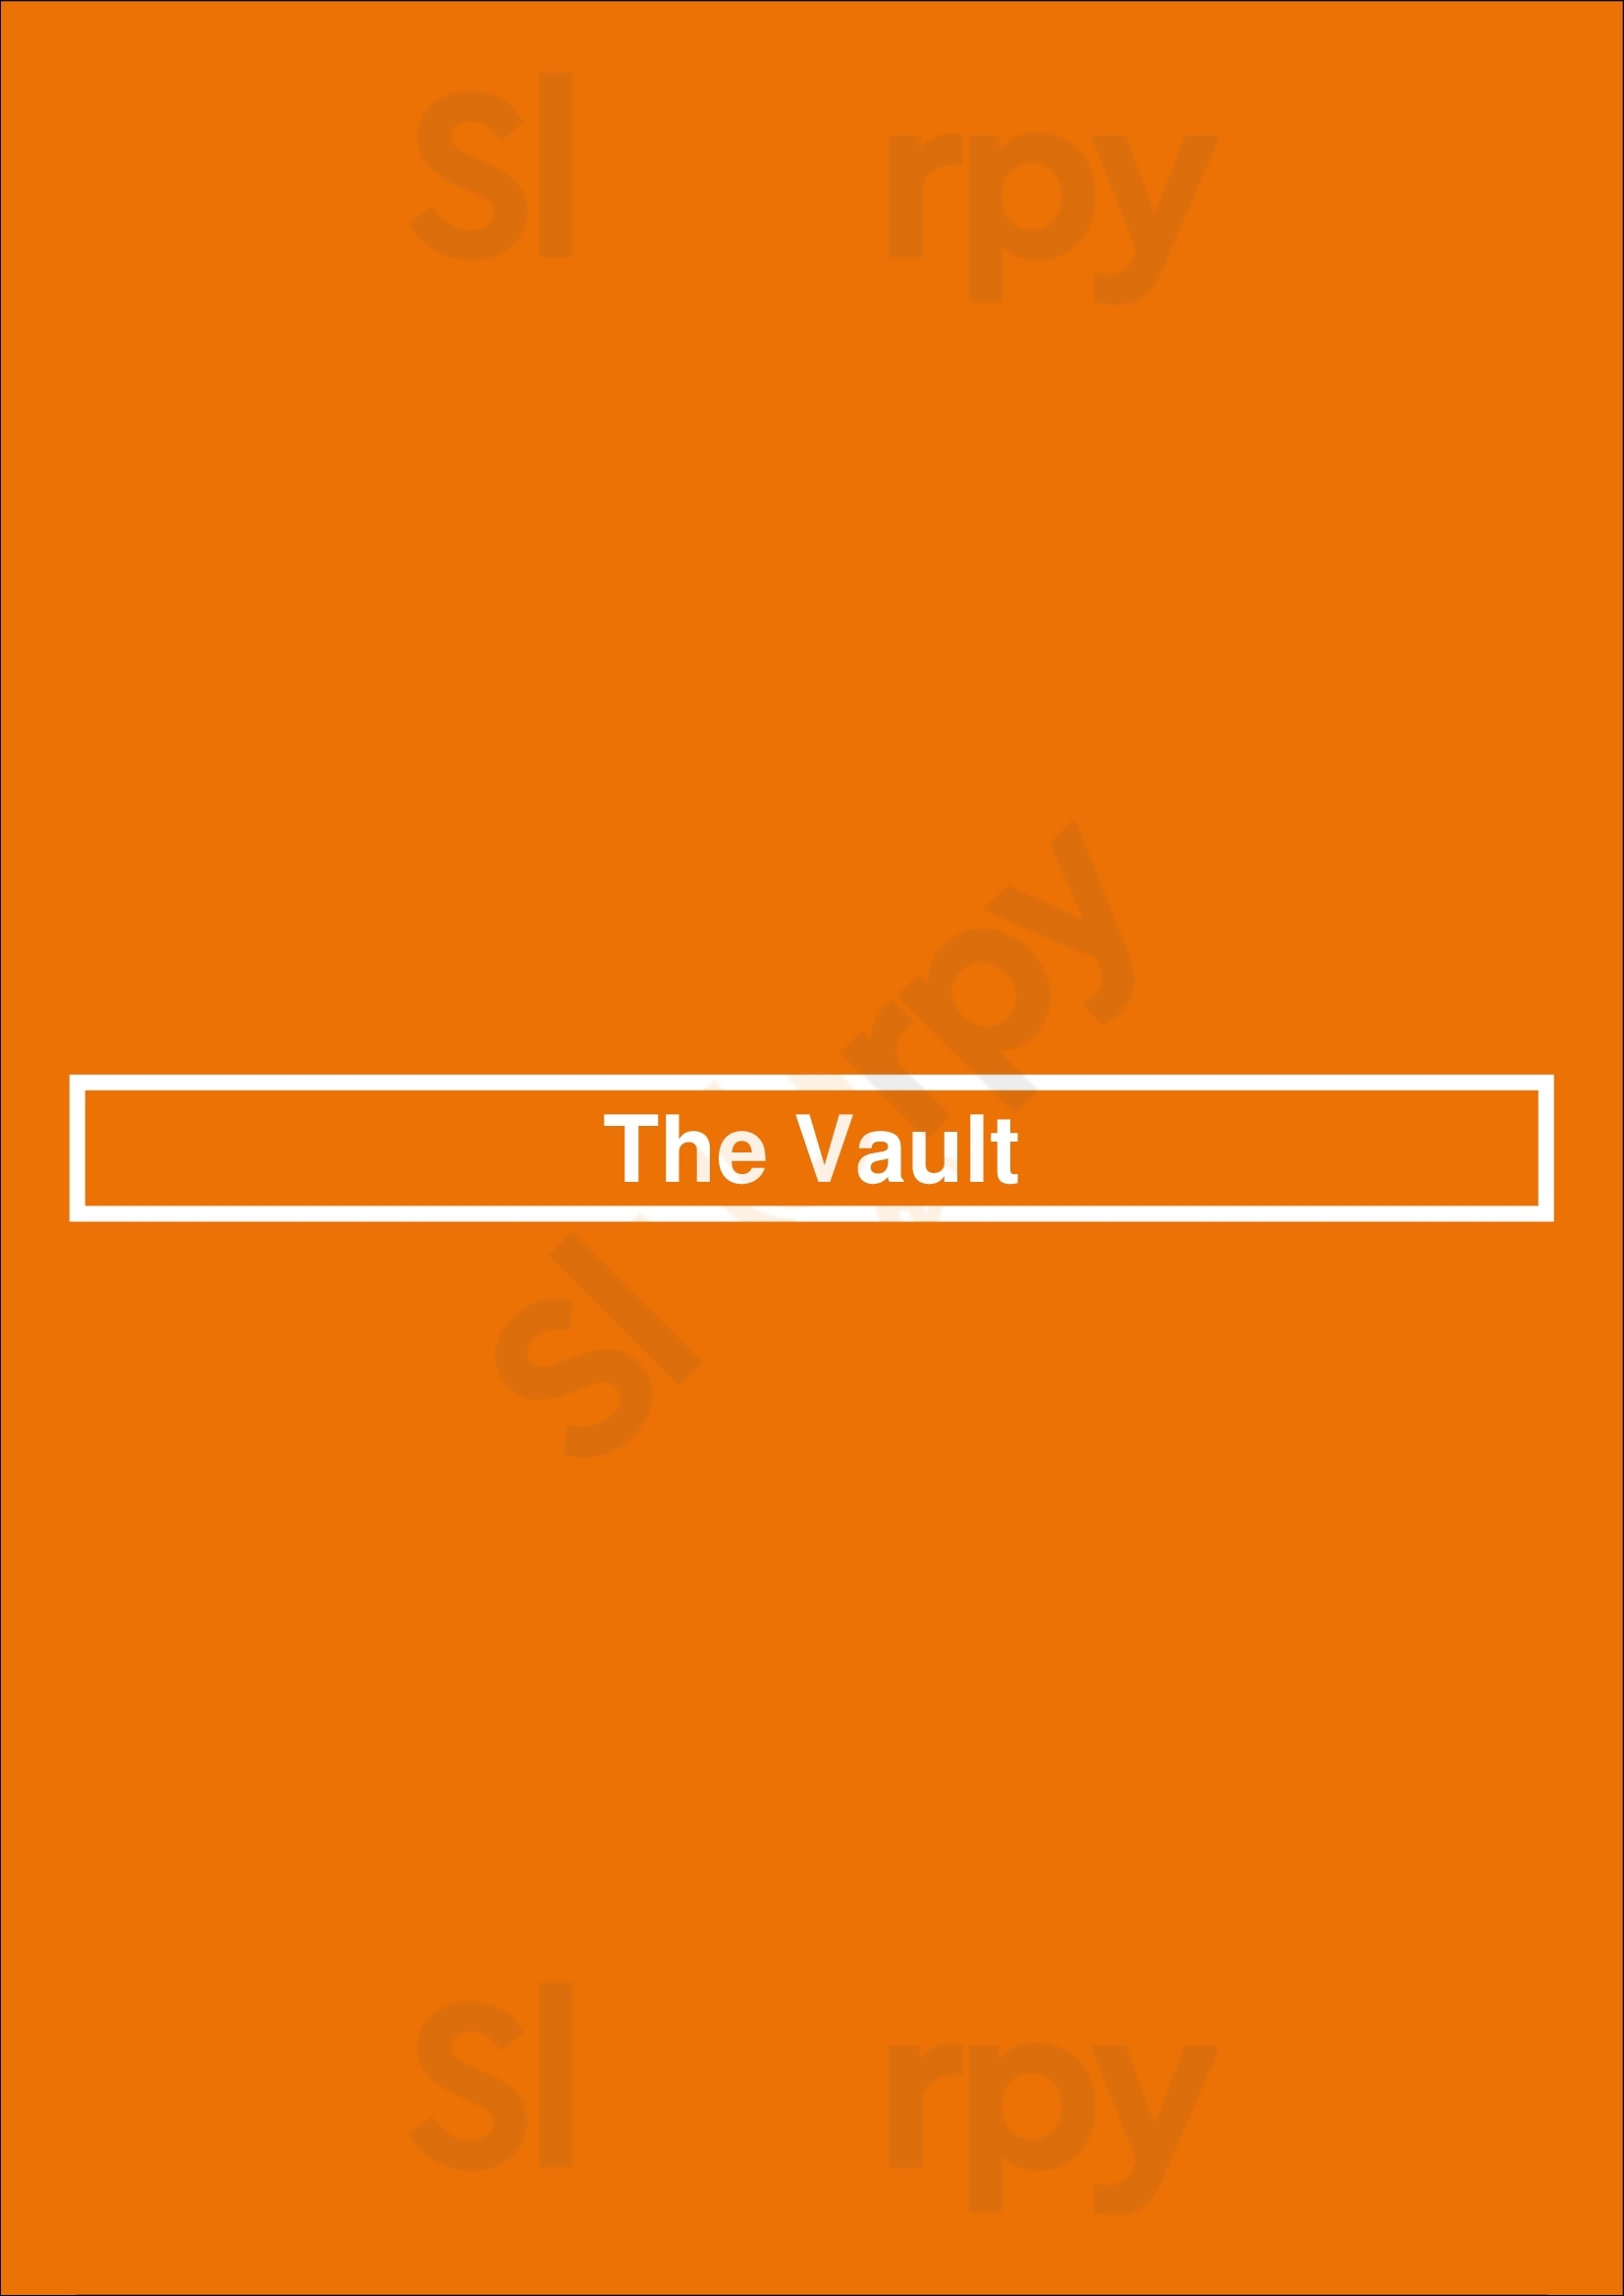 The Vault Cloverdale Menu - 1